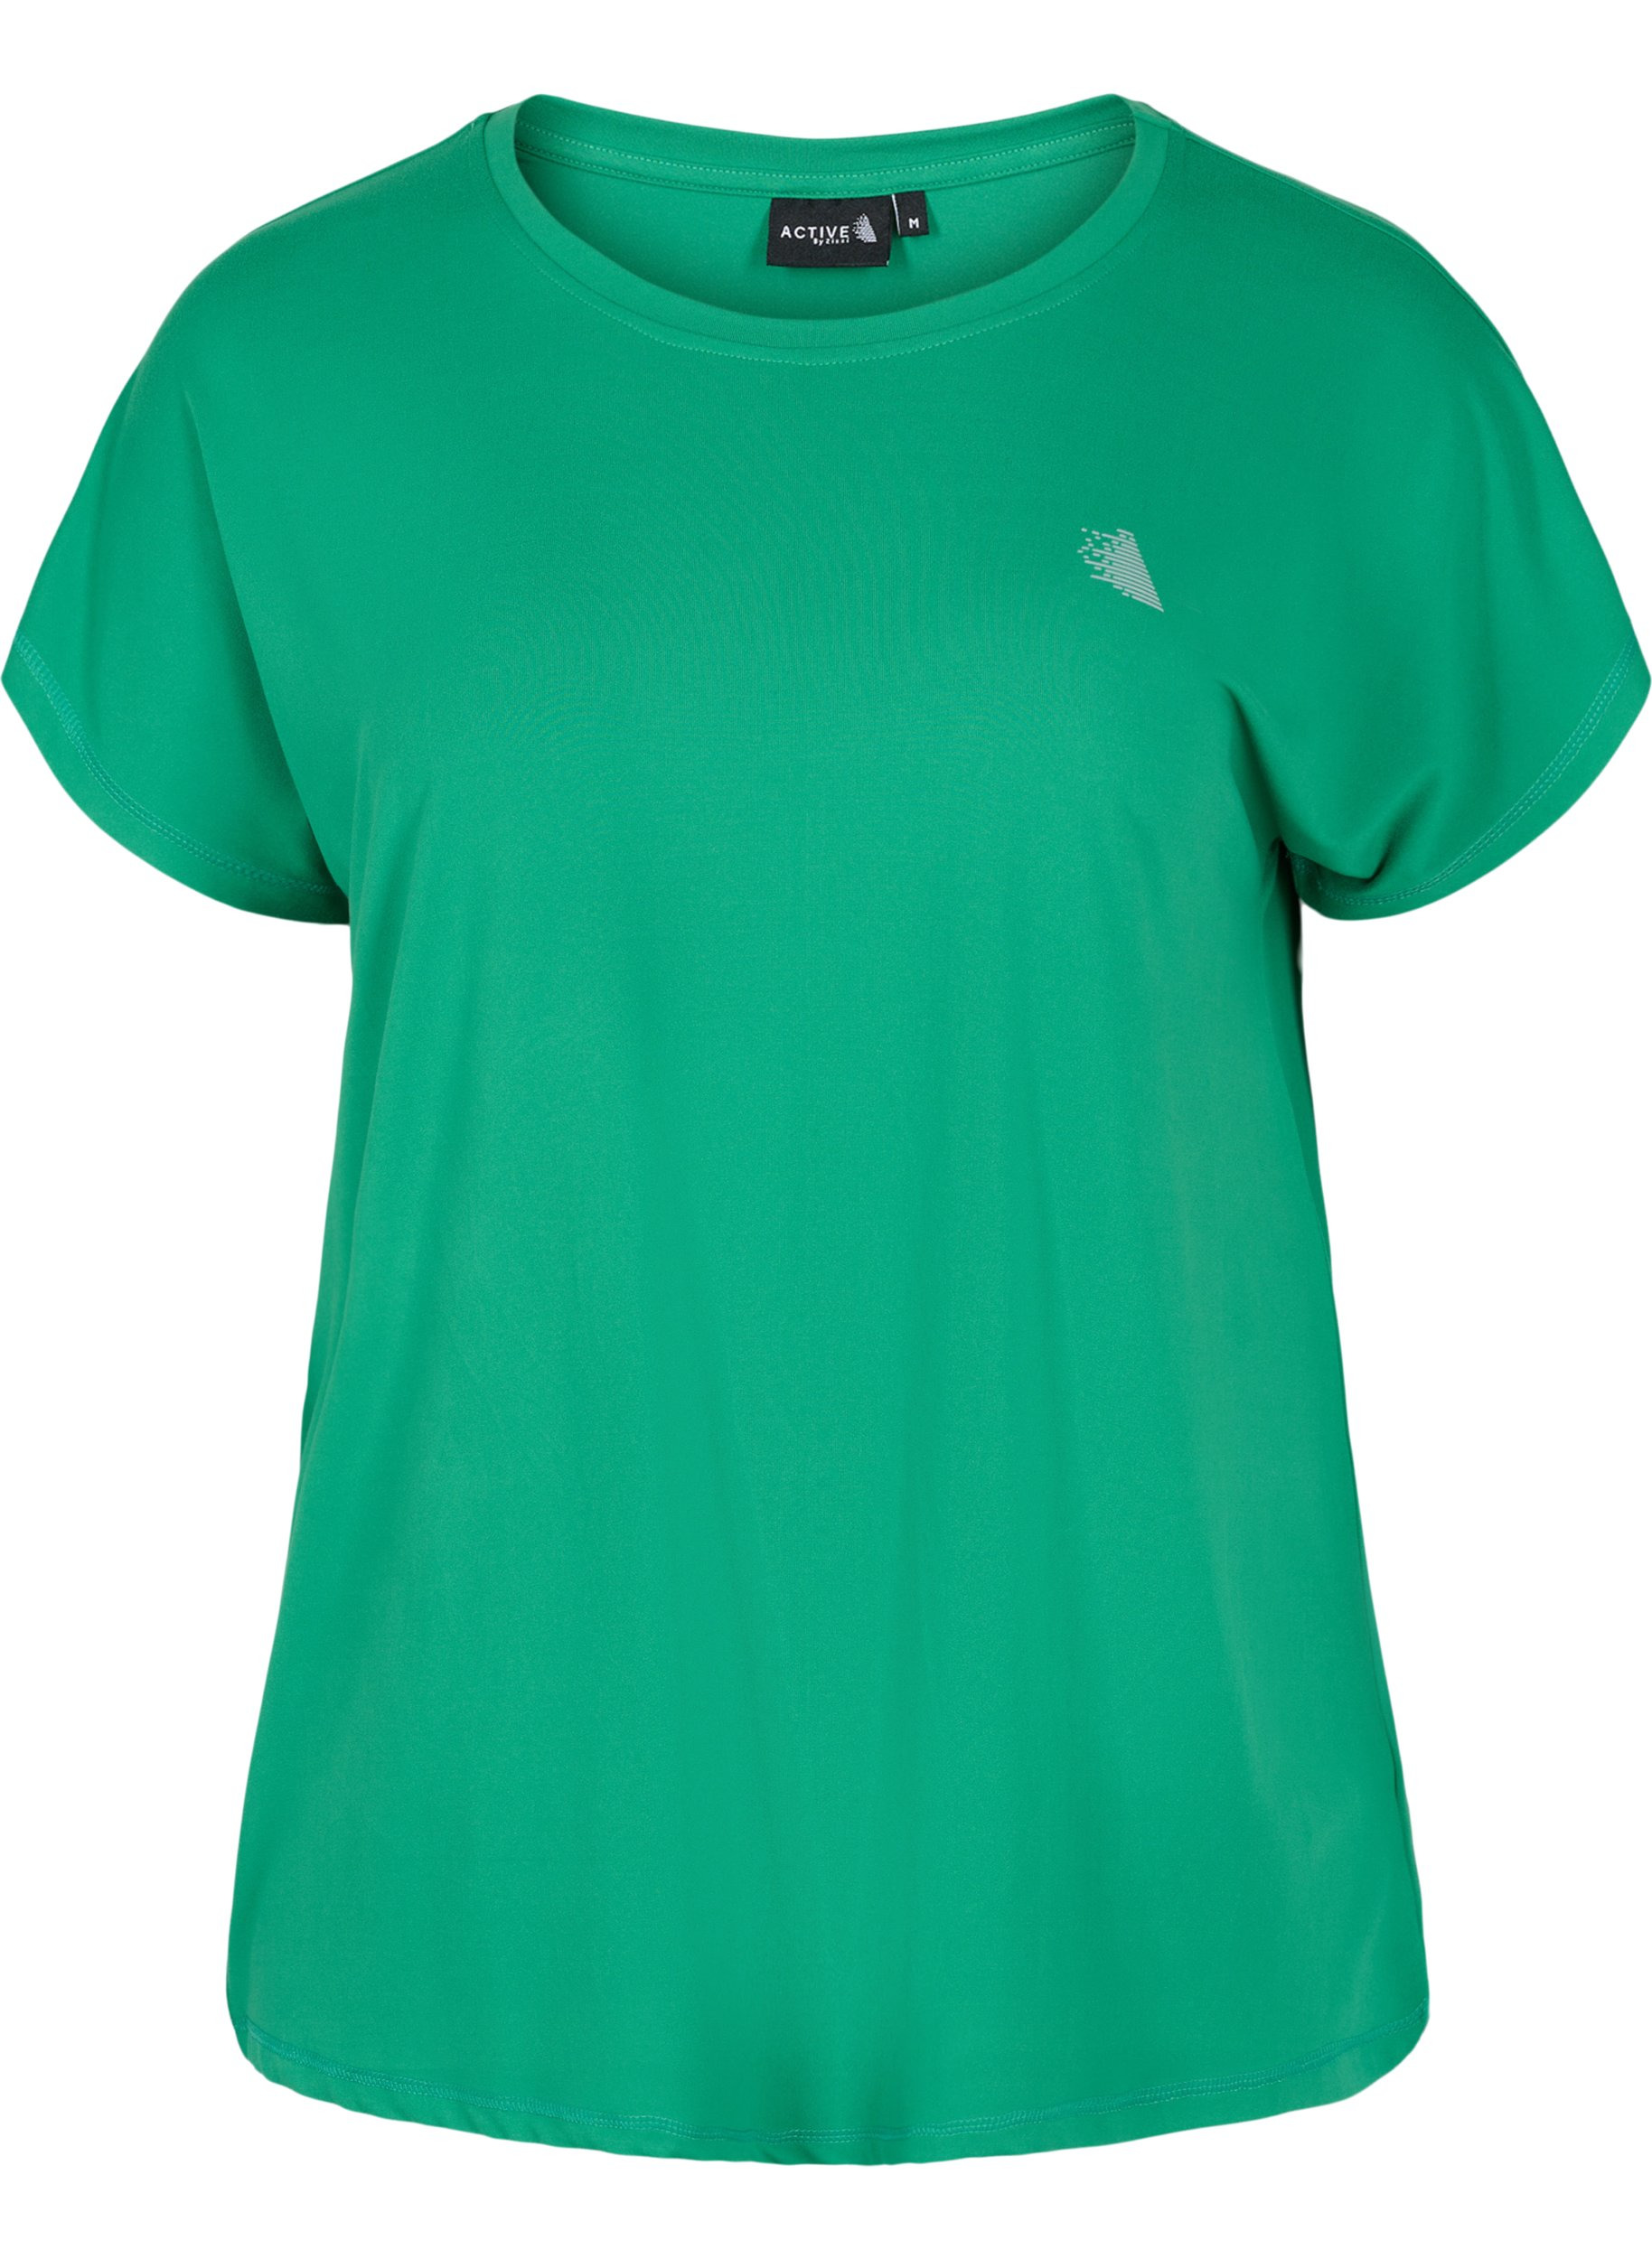 Ensfarvet trænings t-shirt, Jolly Green